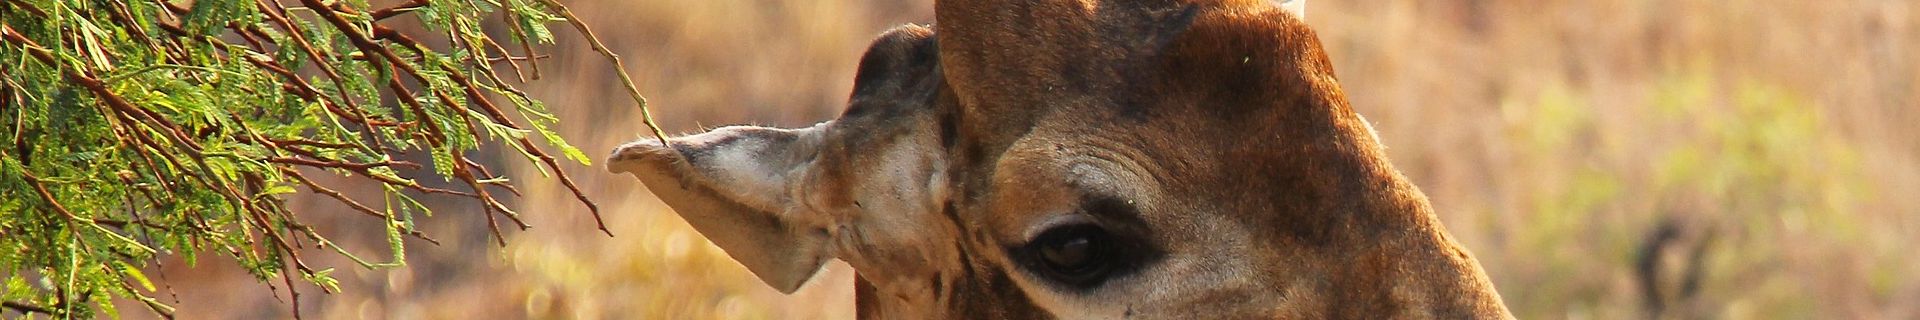 Giraffe Nationalpark Tansania